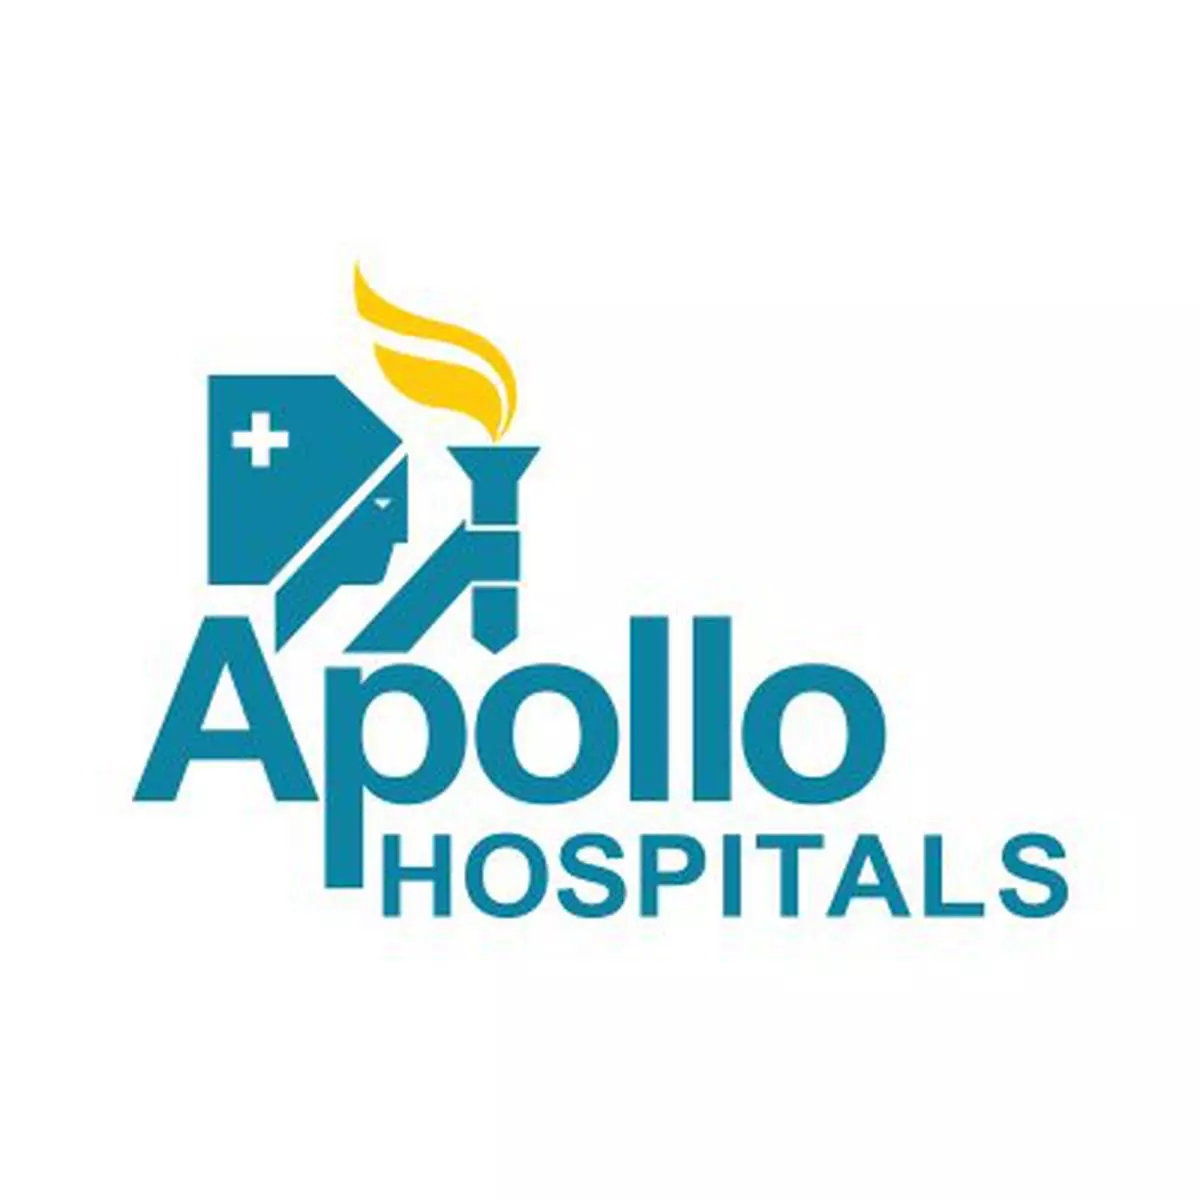 Apollo Hospitals Logo PNG Transparent & SVG Vector - Freebie Supply